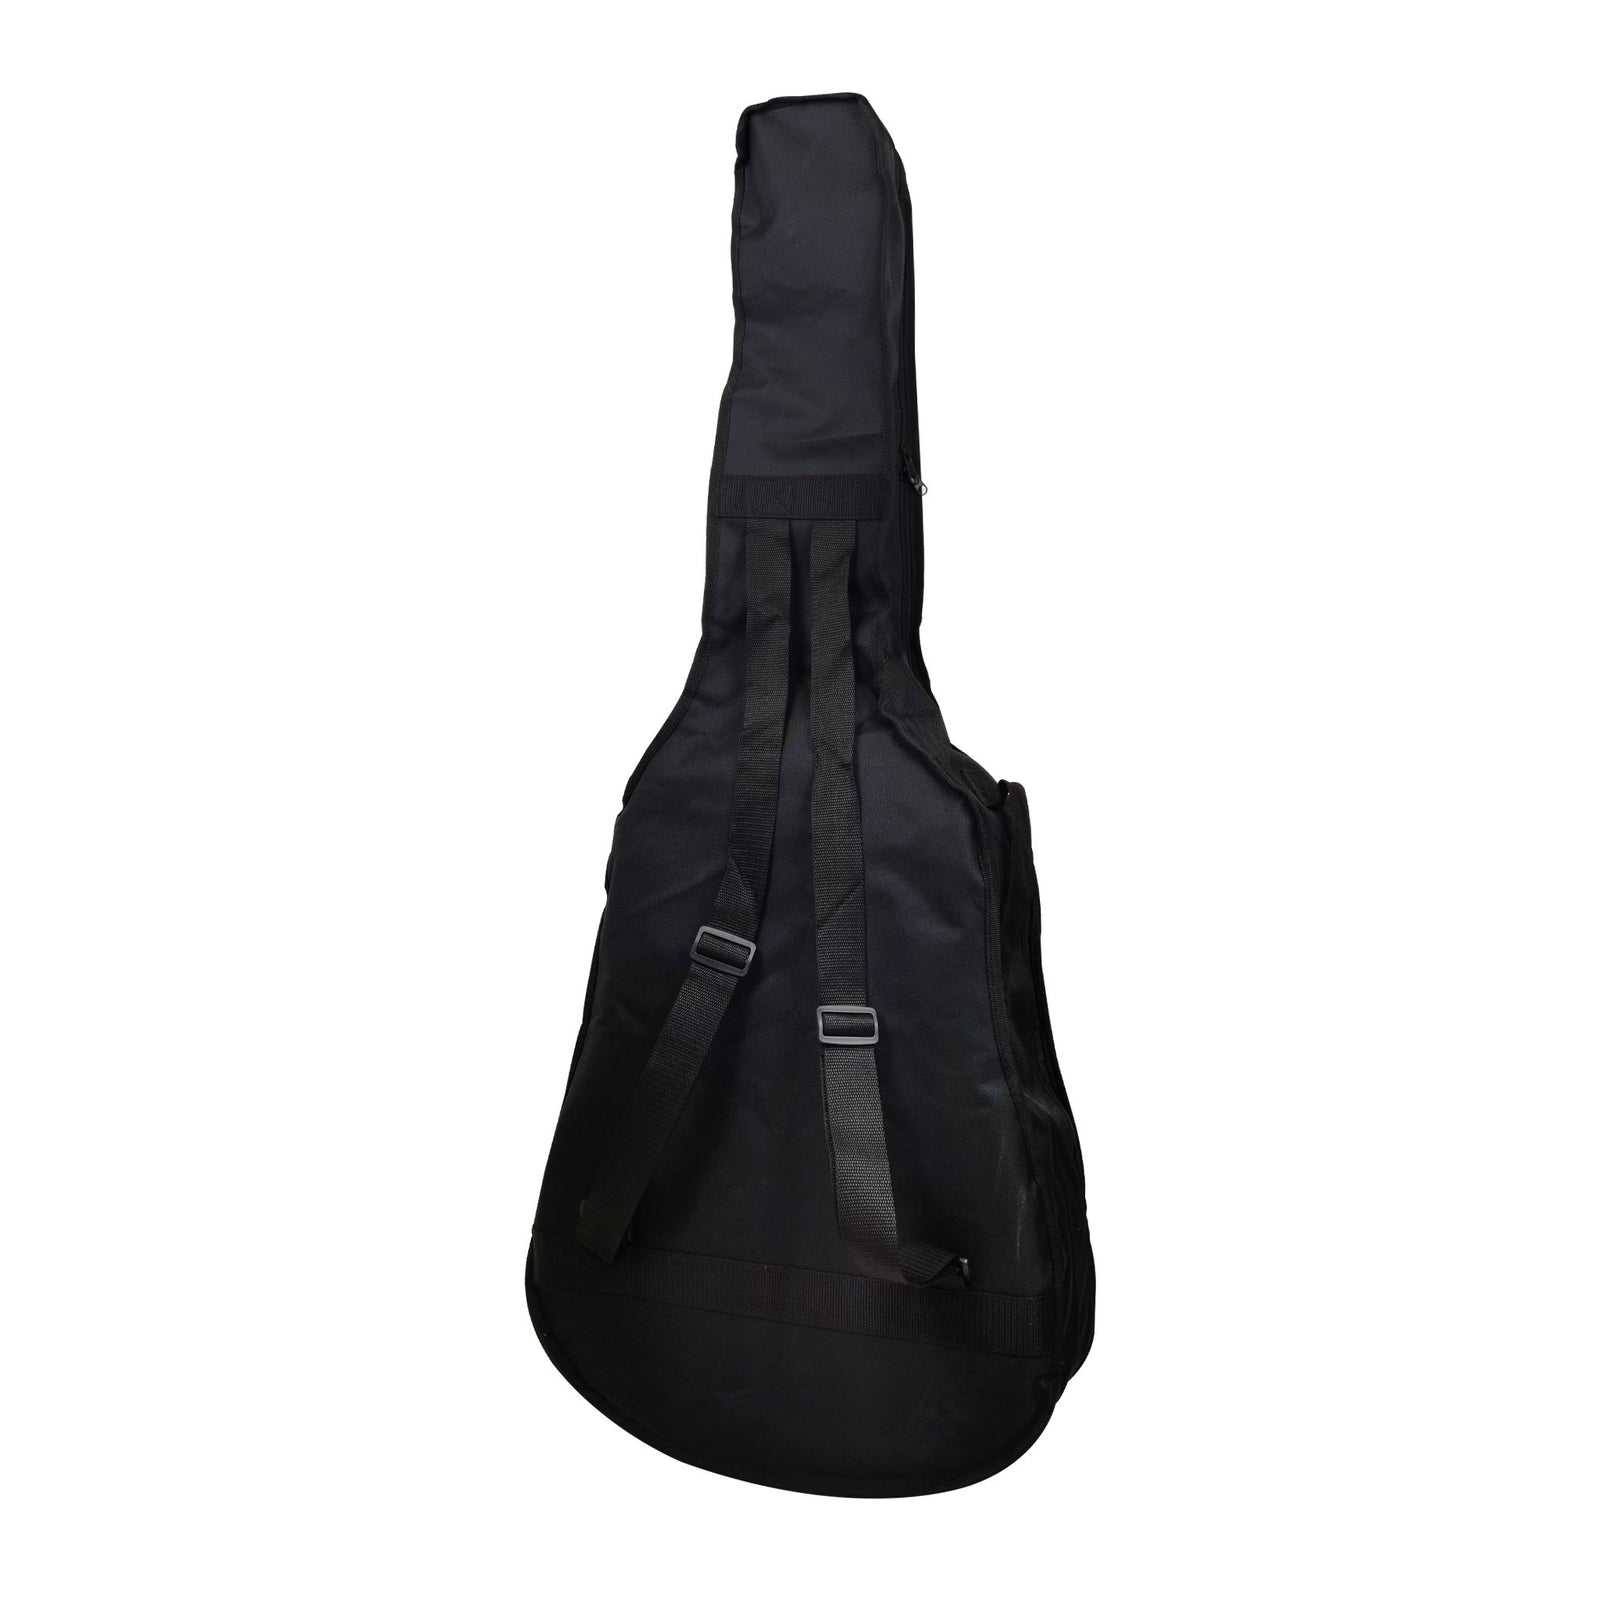 Suzuki SDG-6PK Acoustic Guitar Package Natural (NL)